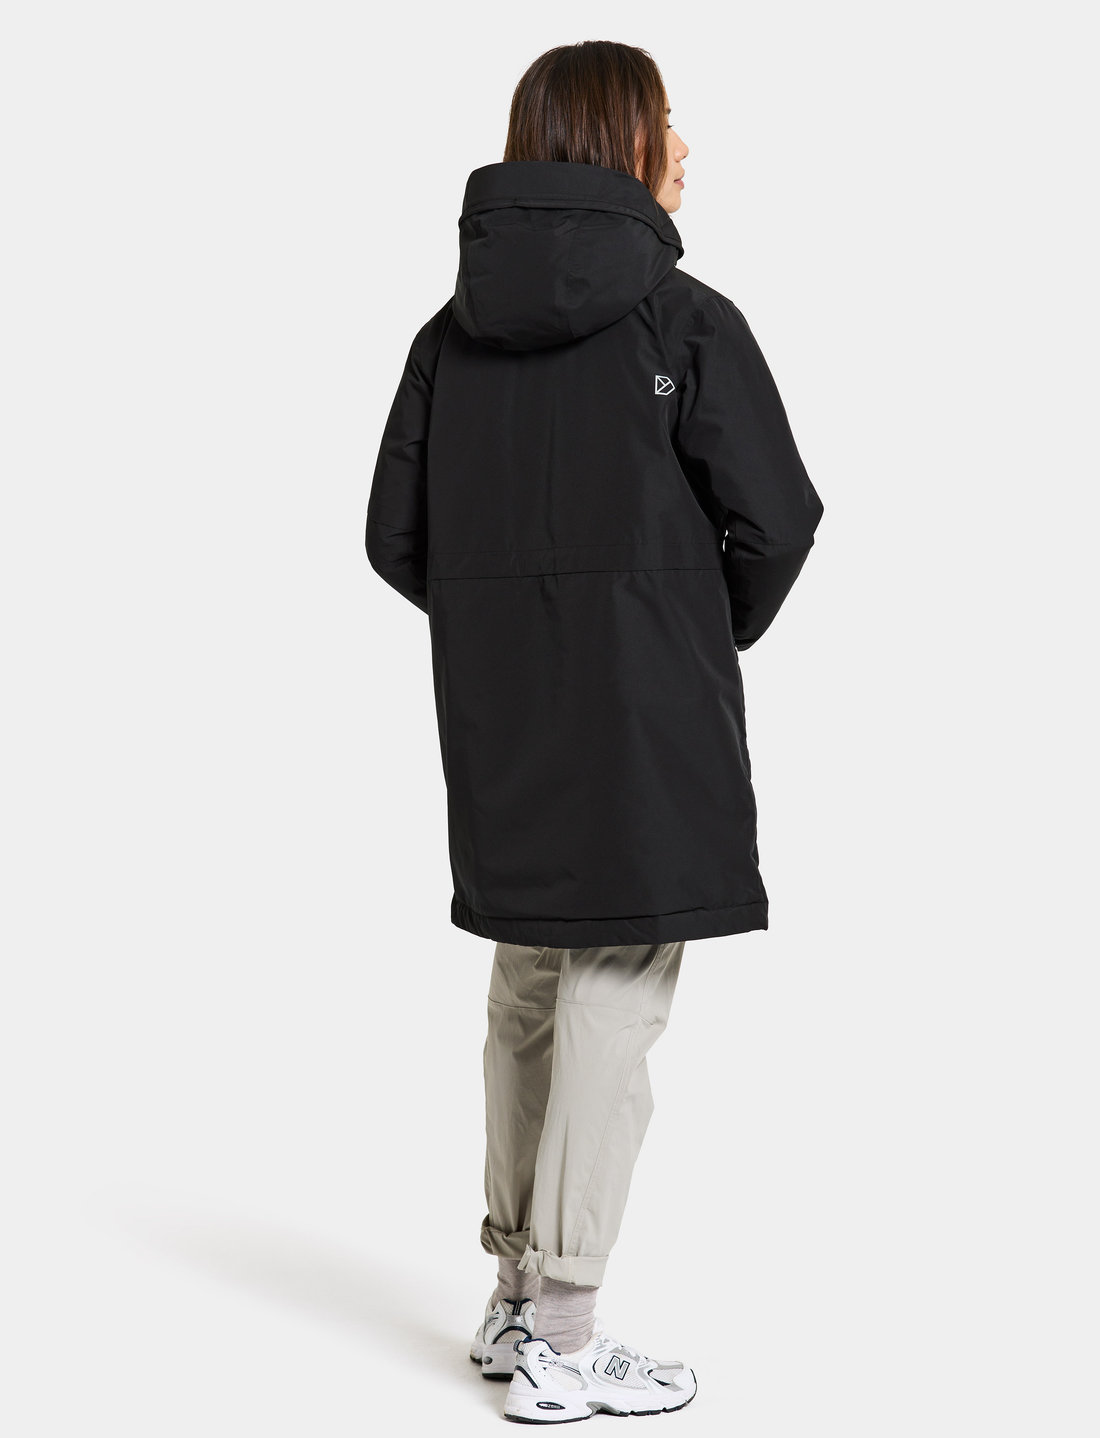 Didriksons Ella Wns Parka 2 – jackets & coats – shop at Booztlet